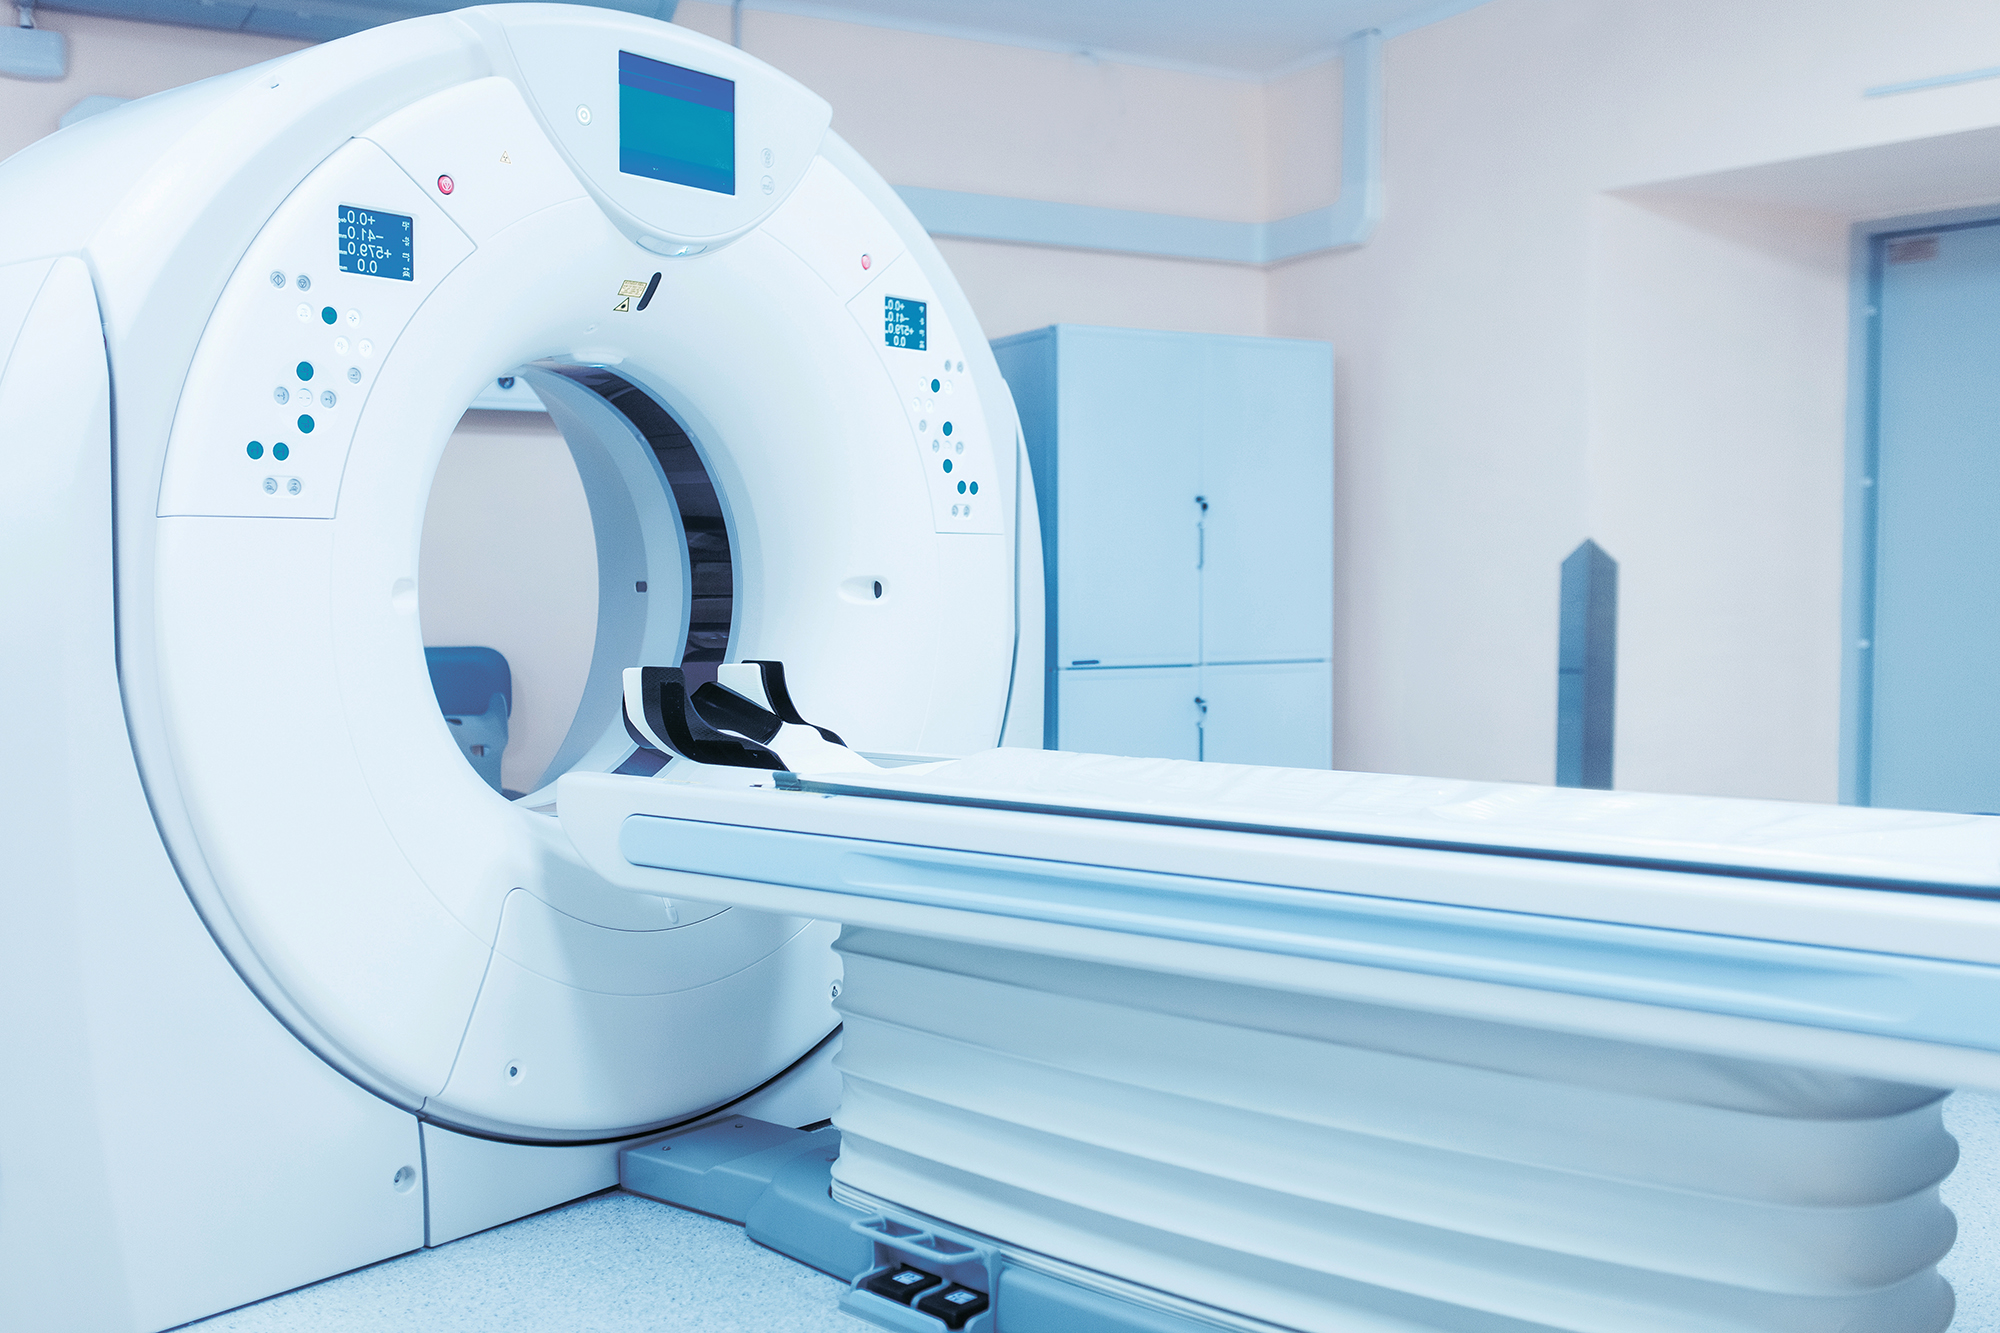 CT machine in a hospital setting